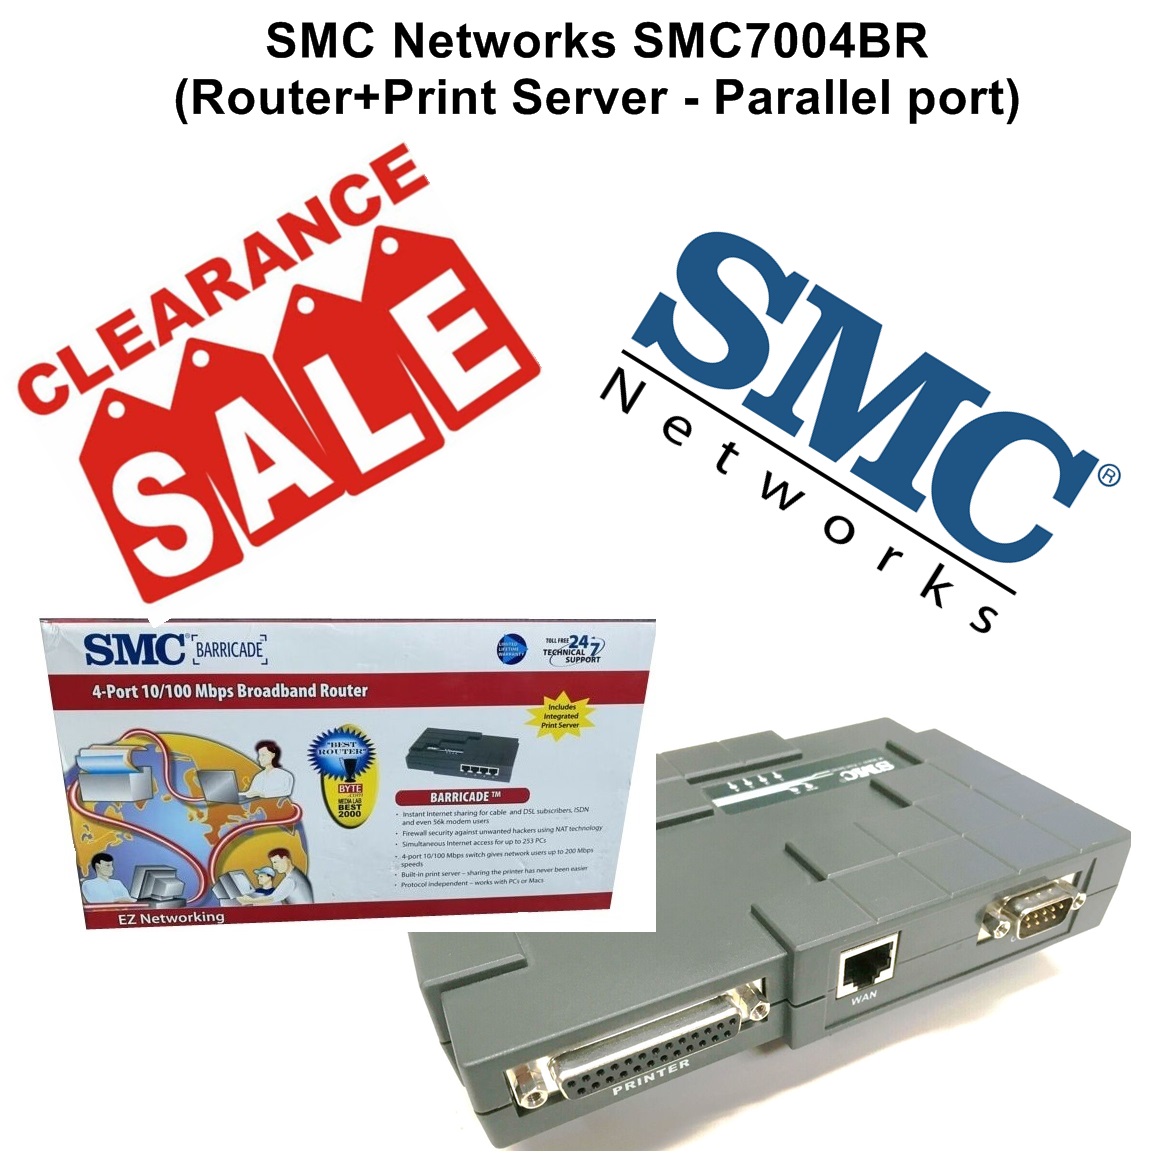 SMC Networks SMC7004BR (Router+Print Server)